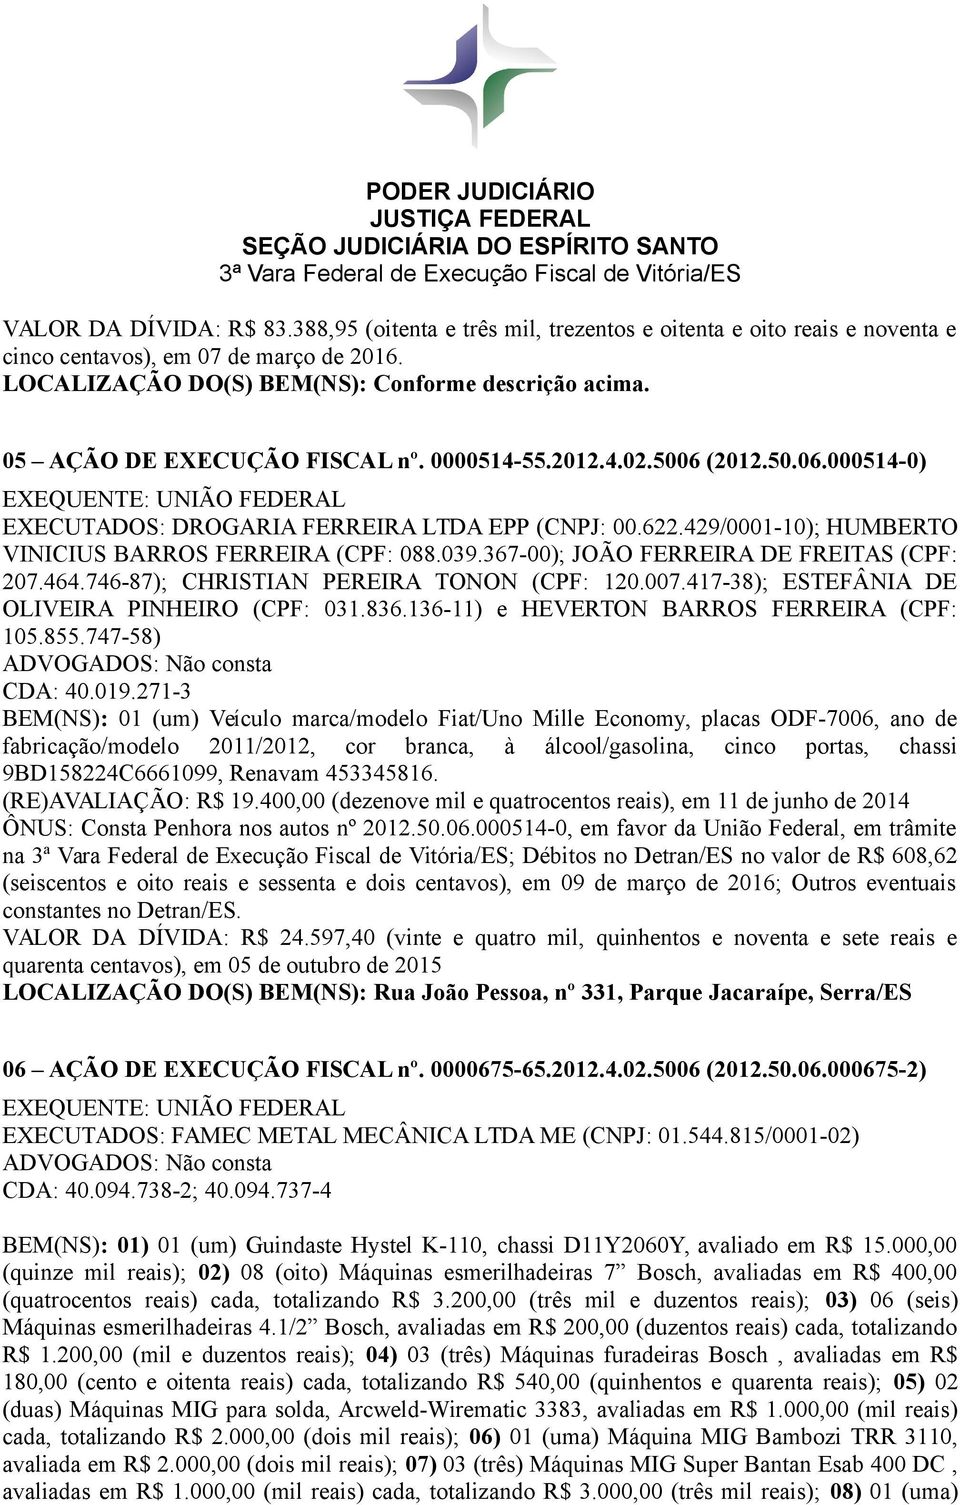 367-00); JOÃO FERREIRA DE FREITAS (CPF: 207.464.746-87); CHRISTIAN PEREIRA TONON (CPF: 120.007.417-38); ESTEFÂNIA DE OLIVEIRA PINHEIRO (CPF: 031.836.136-11) e HEVERTON BARROS FERREIRA (CPF: 105.855.